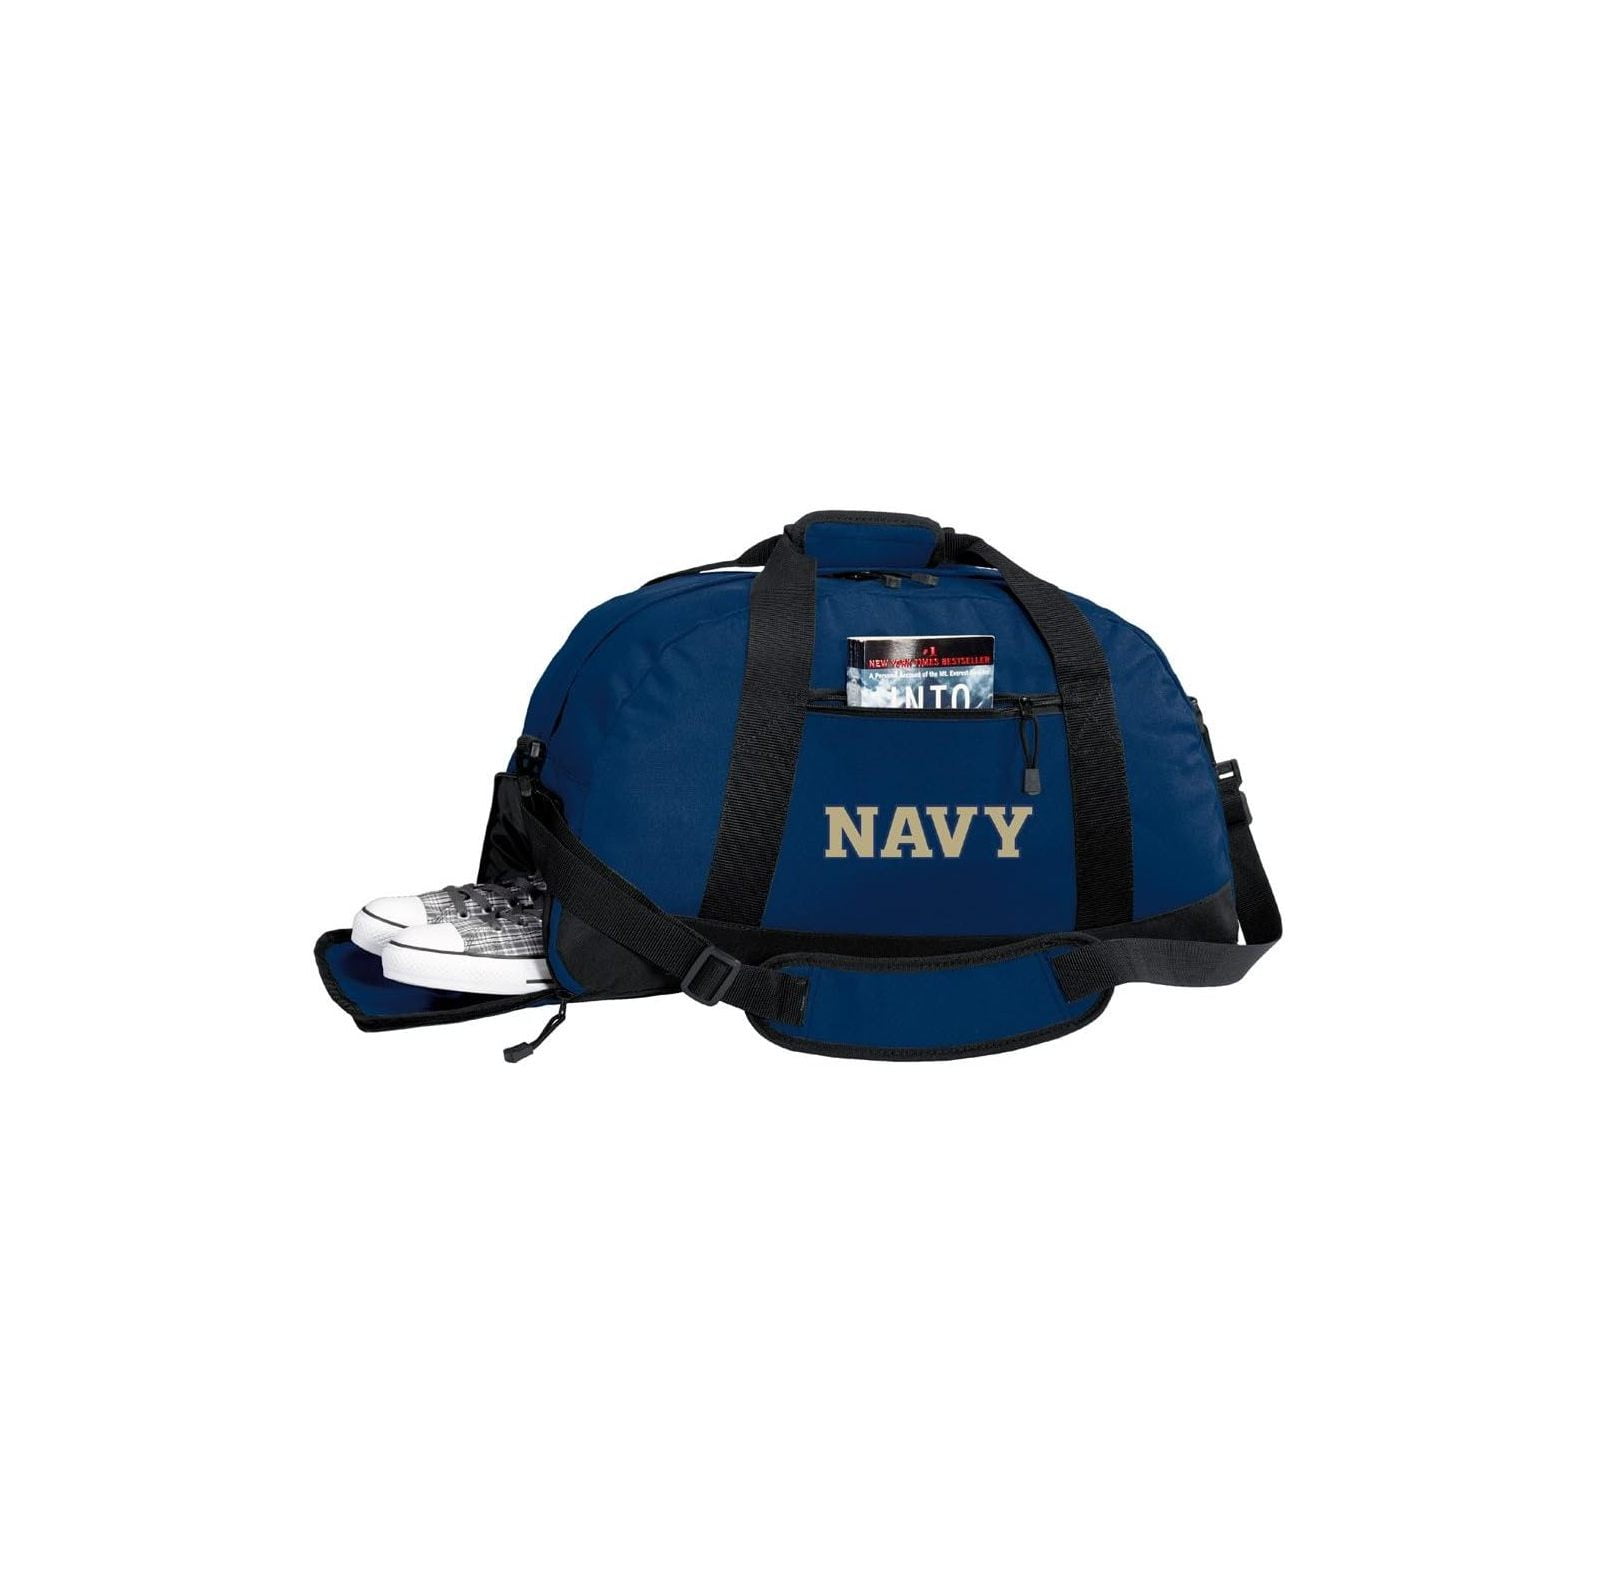 Usna Navy Duffel Bag Naval Gym Bags W Shoe Pockets